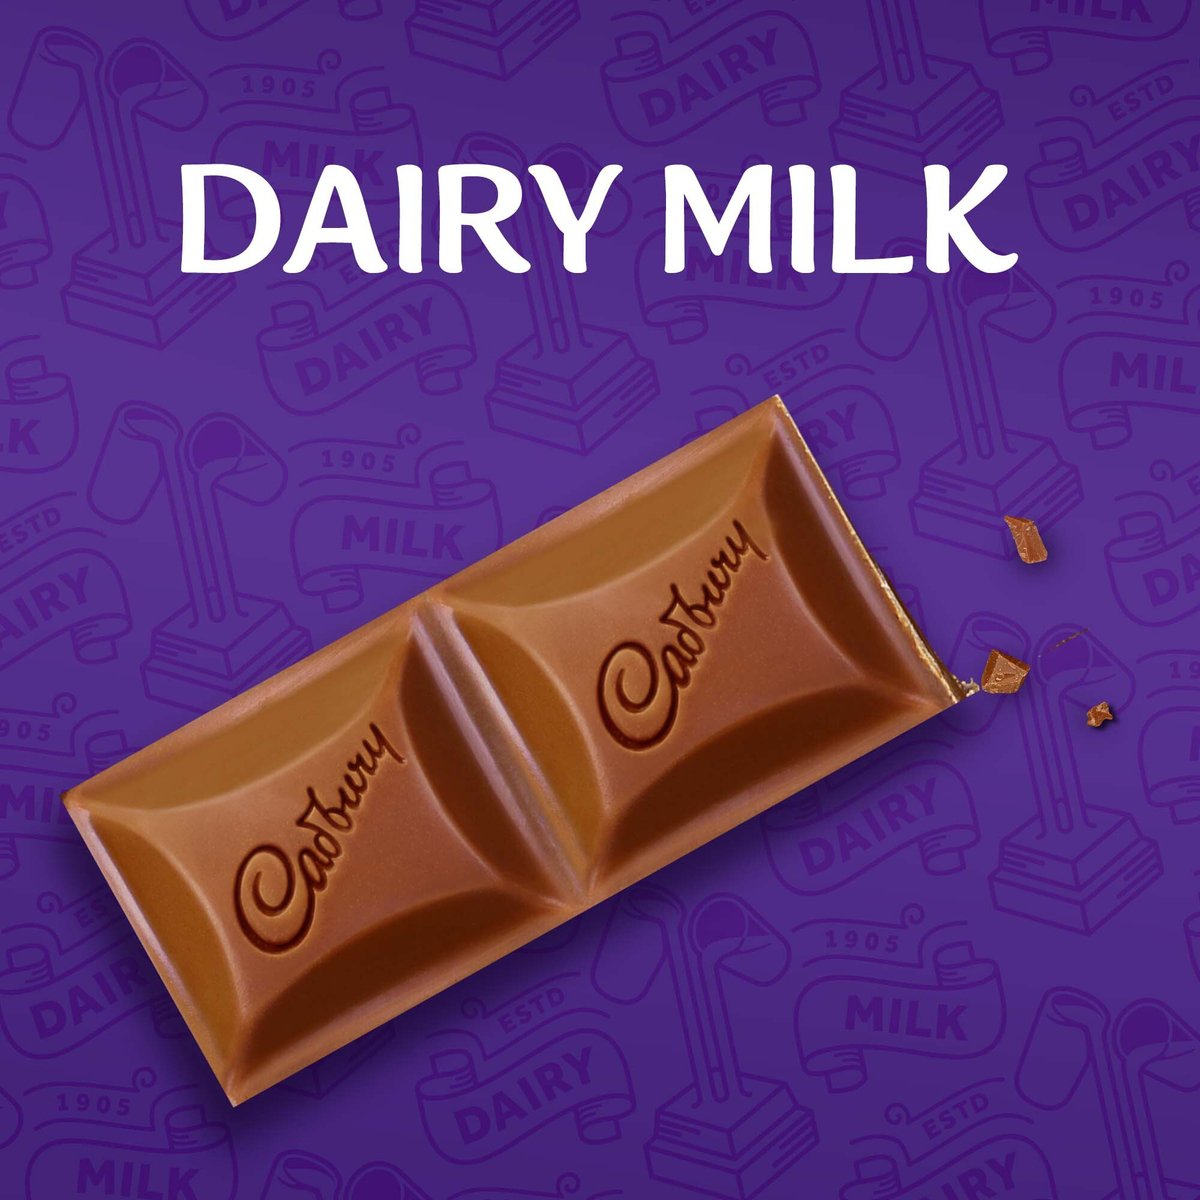 Cadbury Dairy Milk Chocolate 35 g